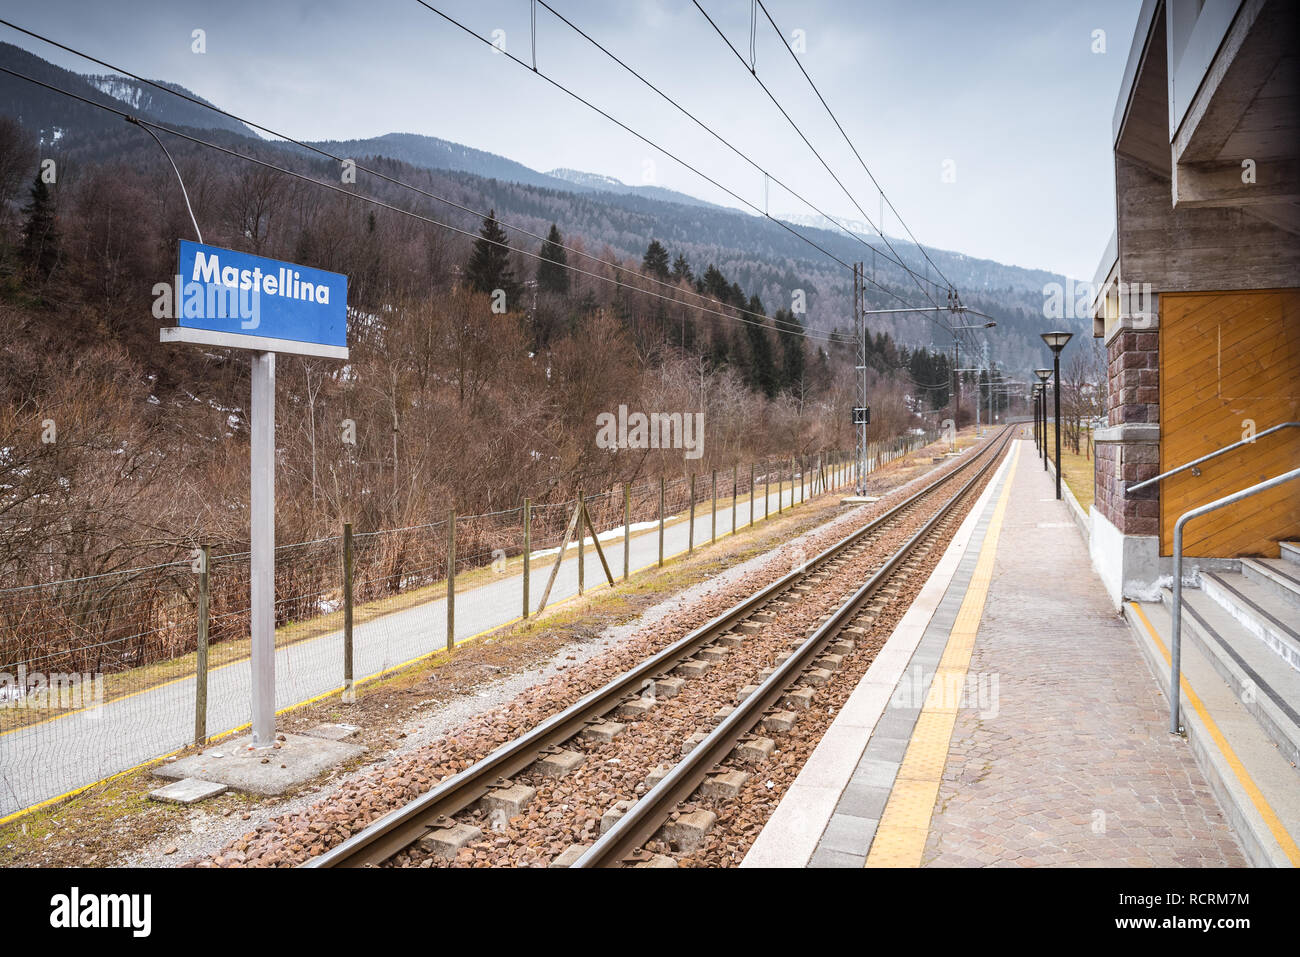 La gare vide dans Mastellina. La gare de Trento Malè Mezzana railway road. Région de Ski Val di Sole, Trento, Italie Banque D'Images